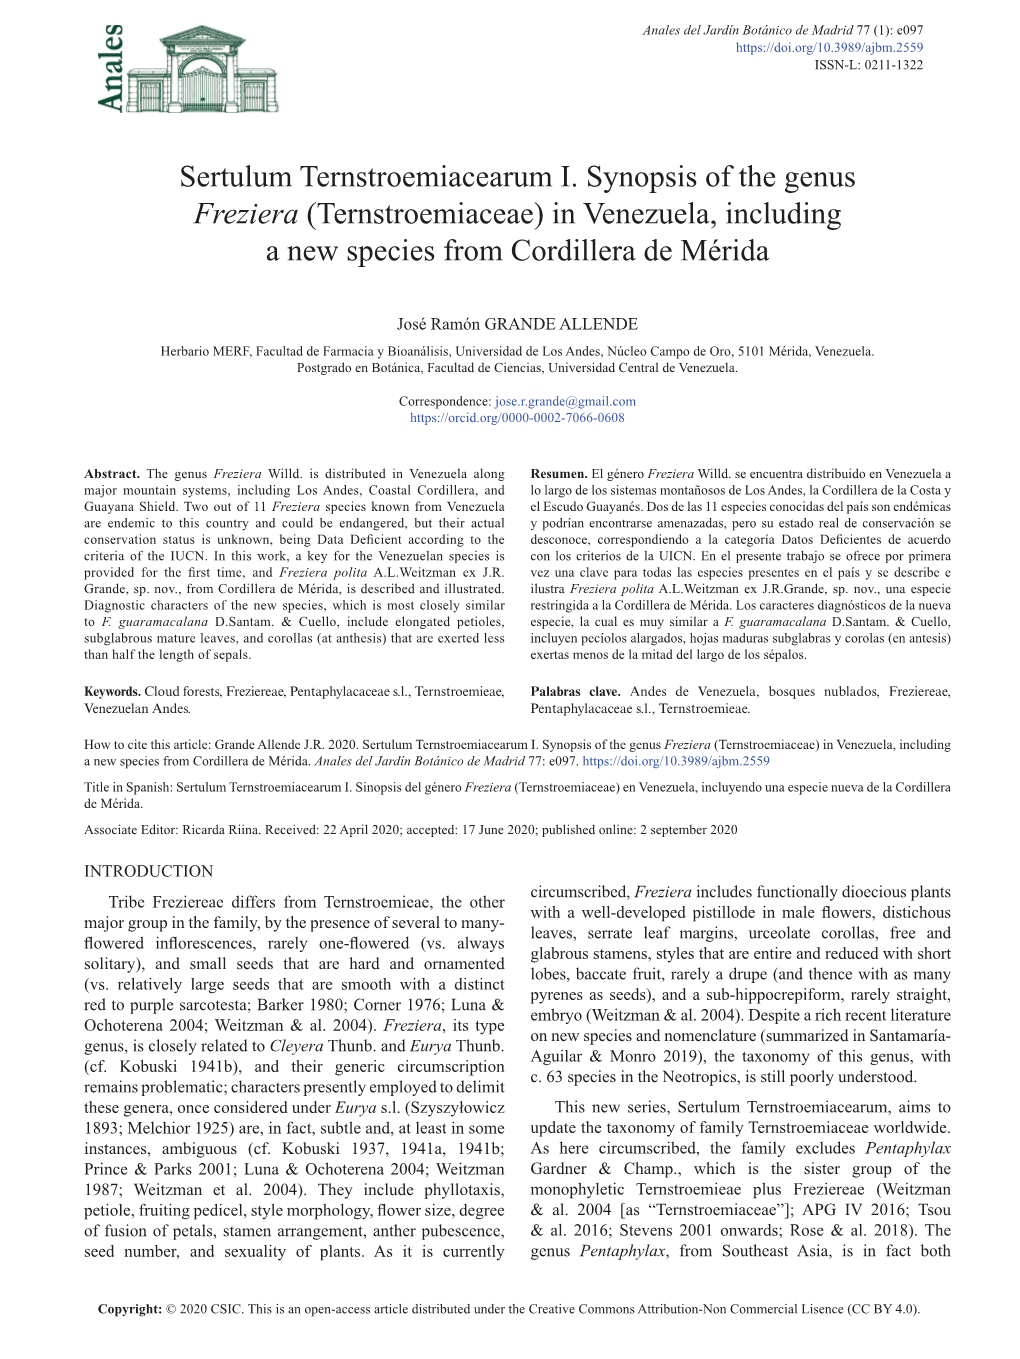 Sertulum Ternstroemiacearum I. Synopsis of the Genus Freziera (Ternstroemiaceae) in Venezuela, Including a New Species from Cordillera De Mérida